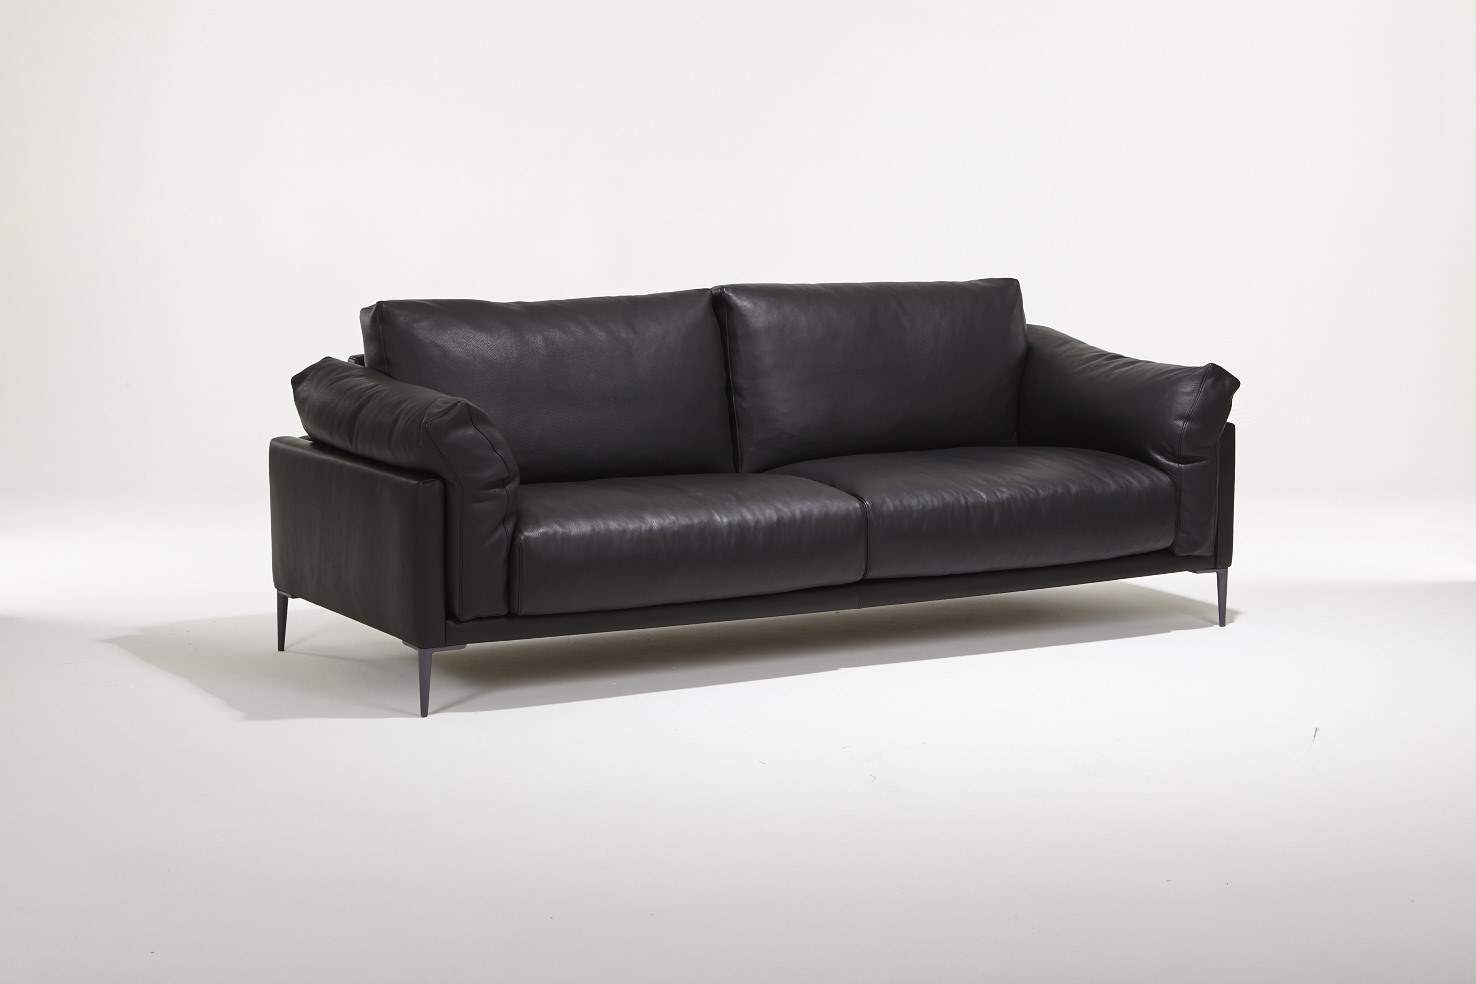 Beaubourg Leather Sofa Black, Designer Leather Furniture